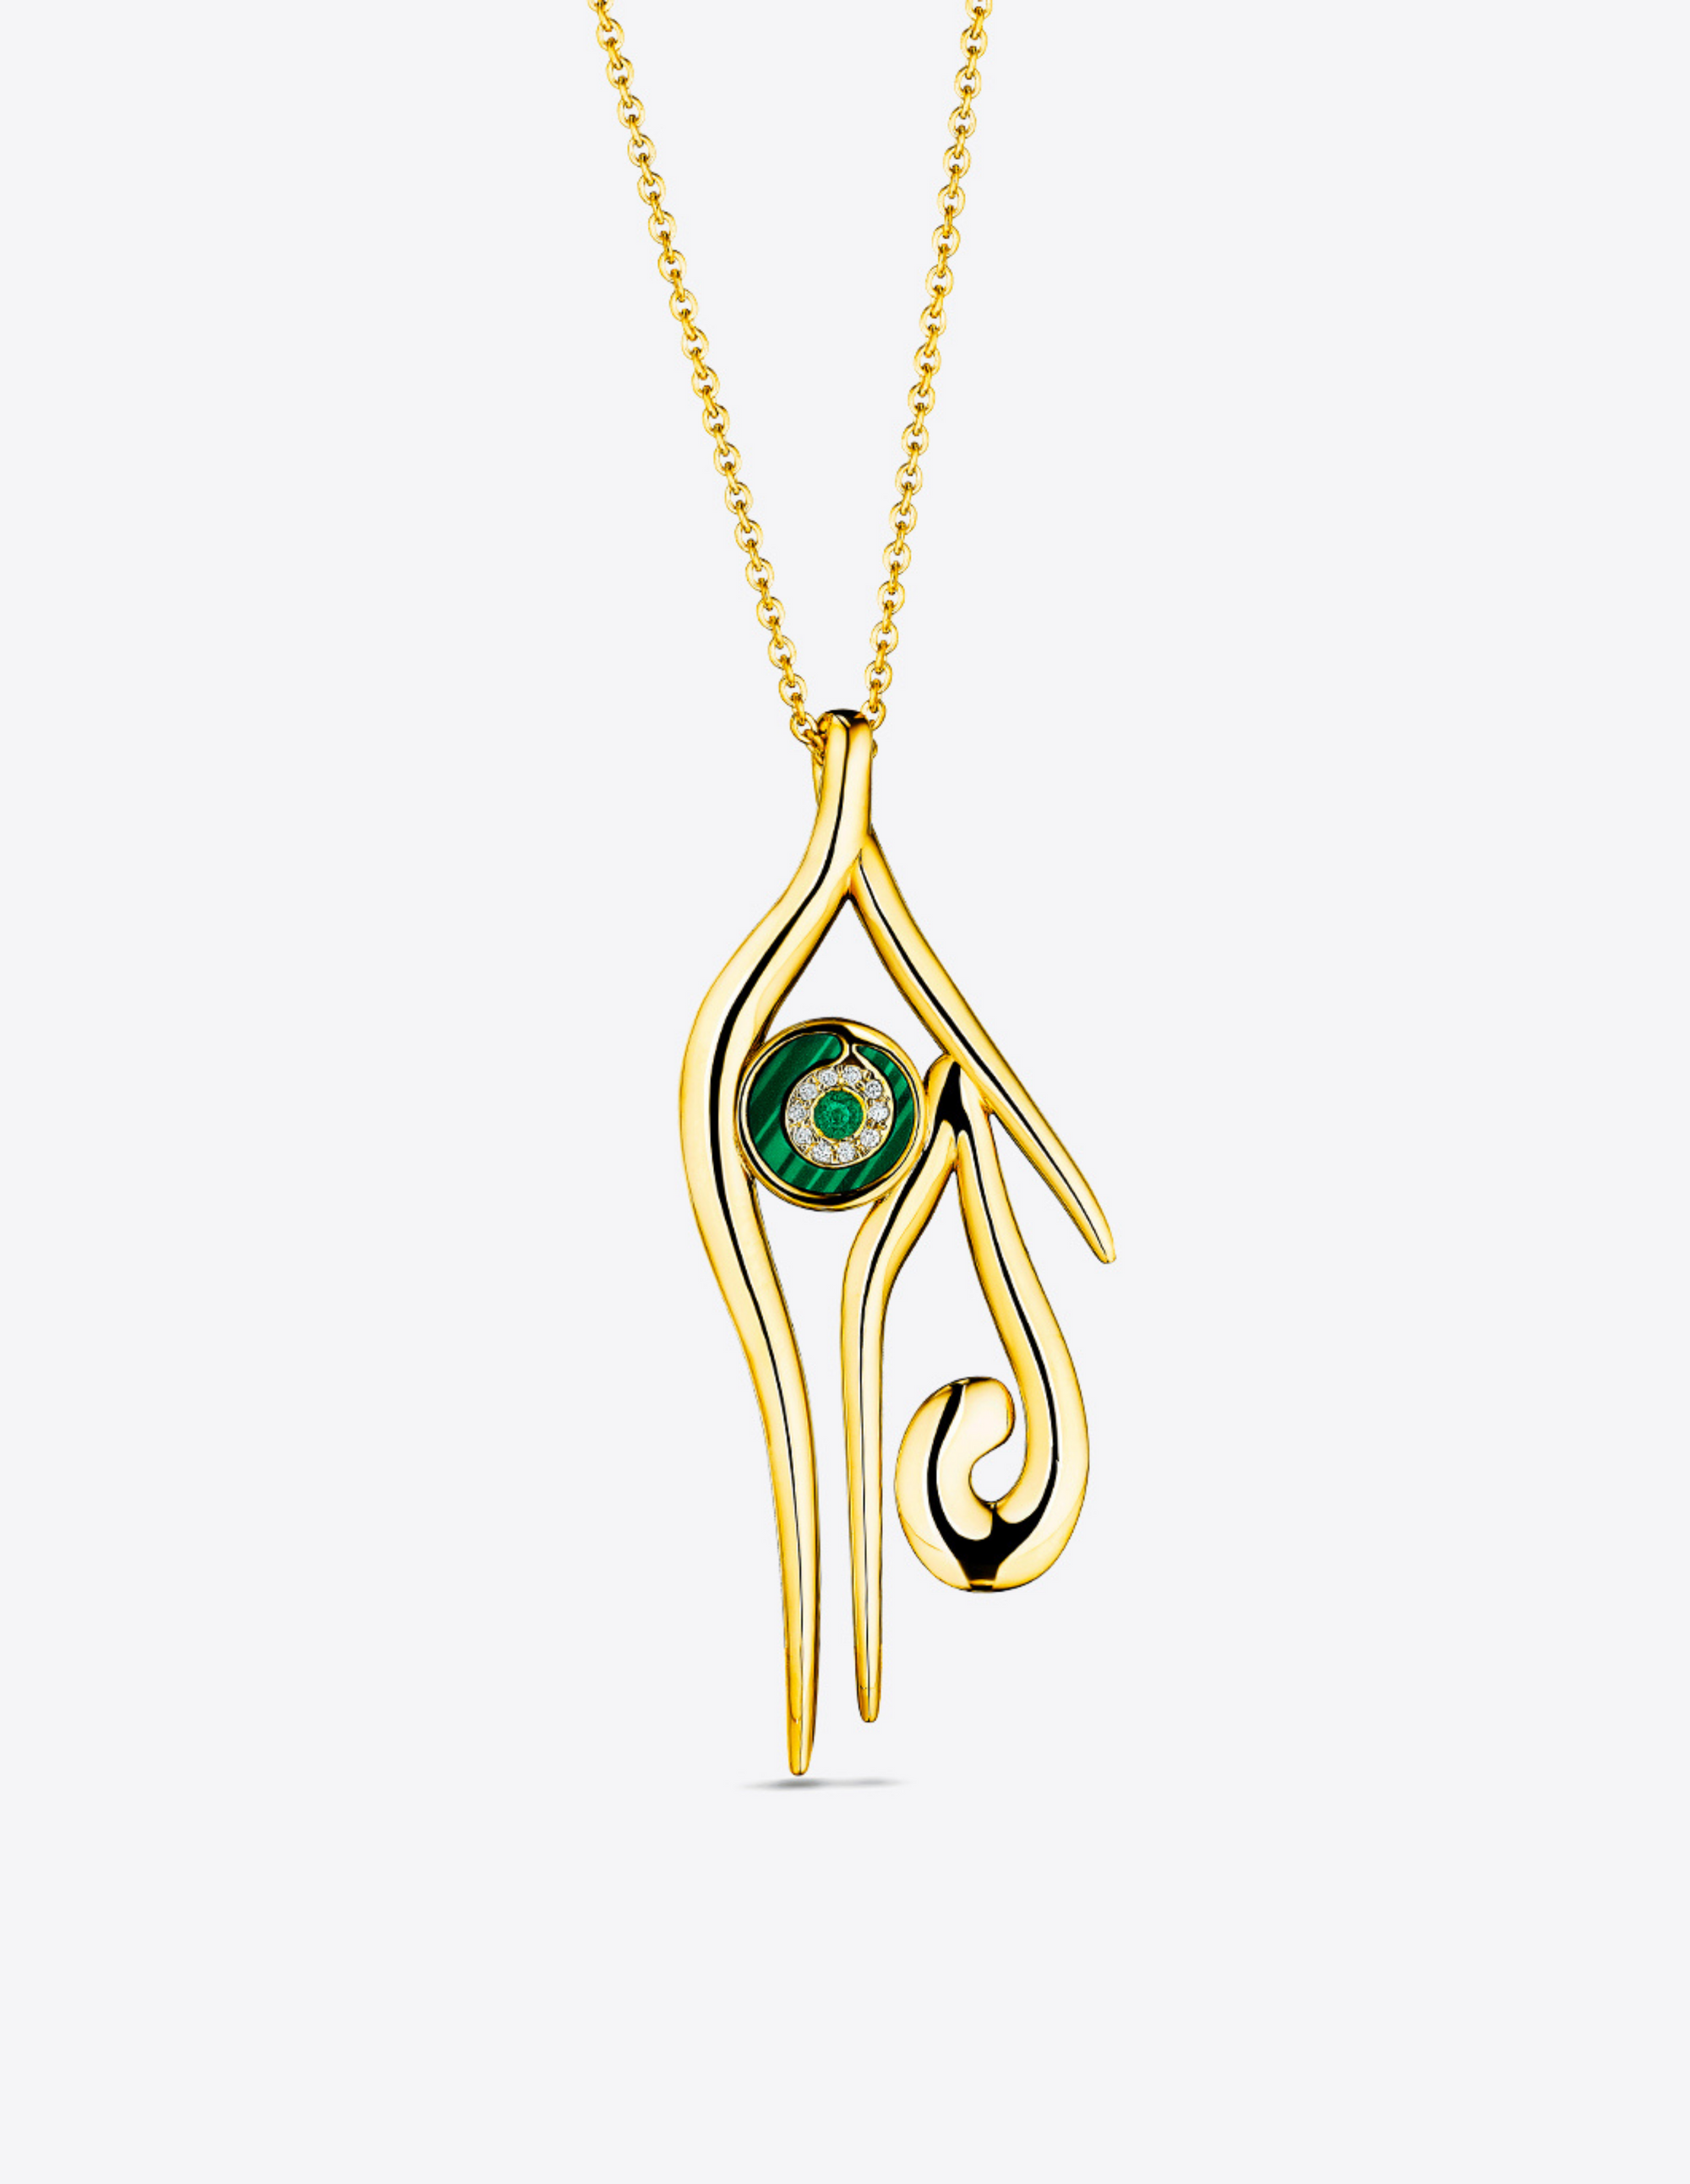 Heru (Horus) Pendant in 18k Gold with Emerald & Diamonds